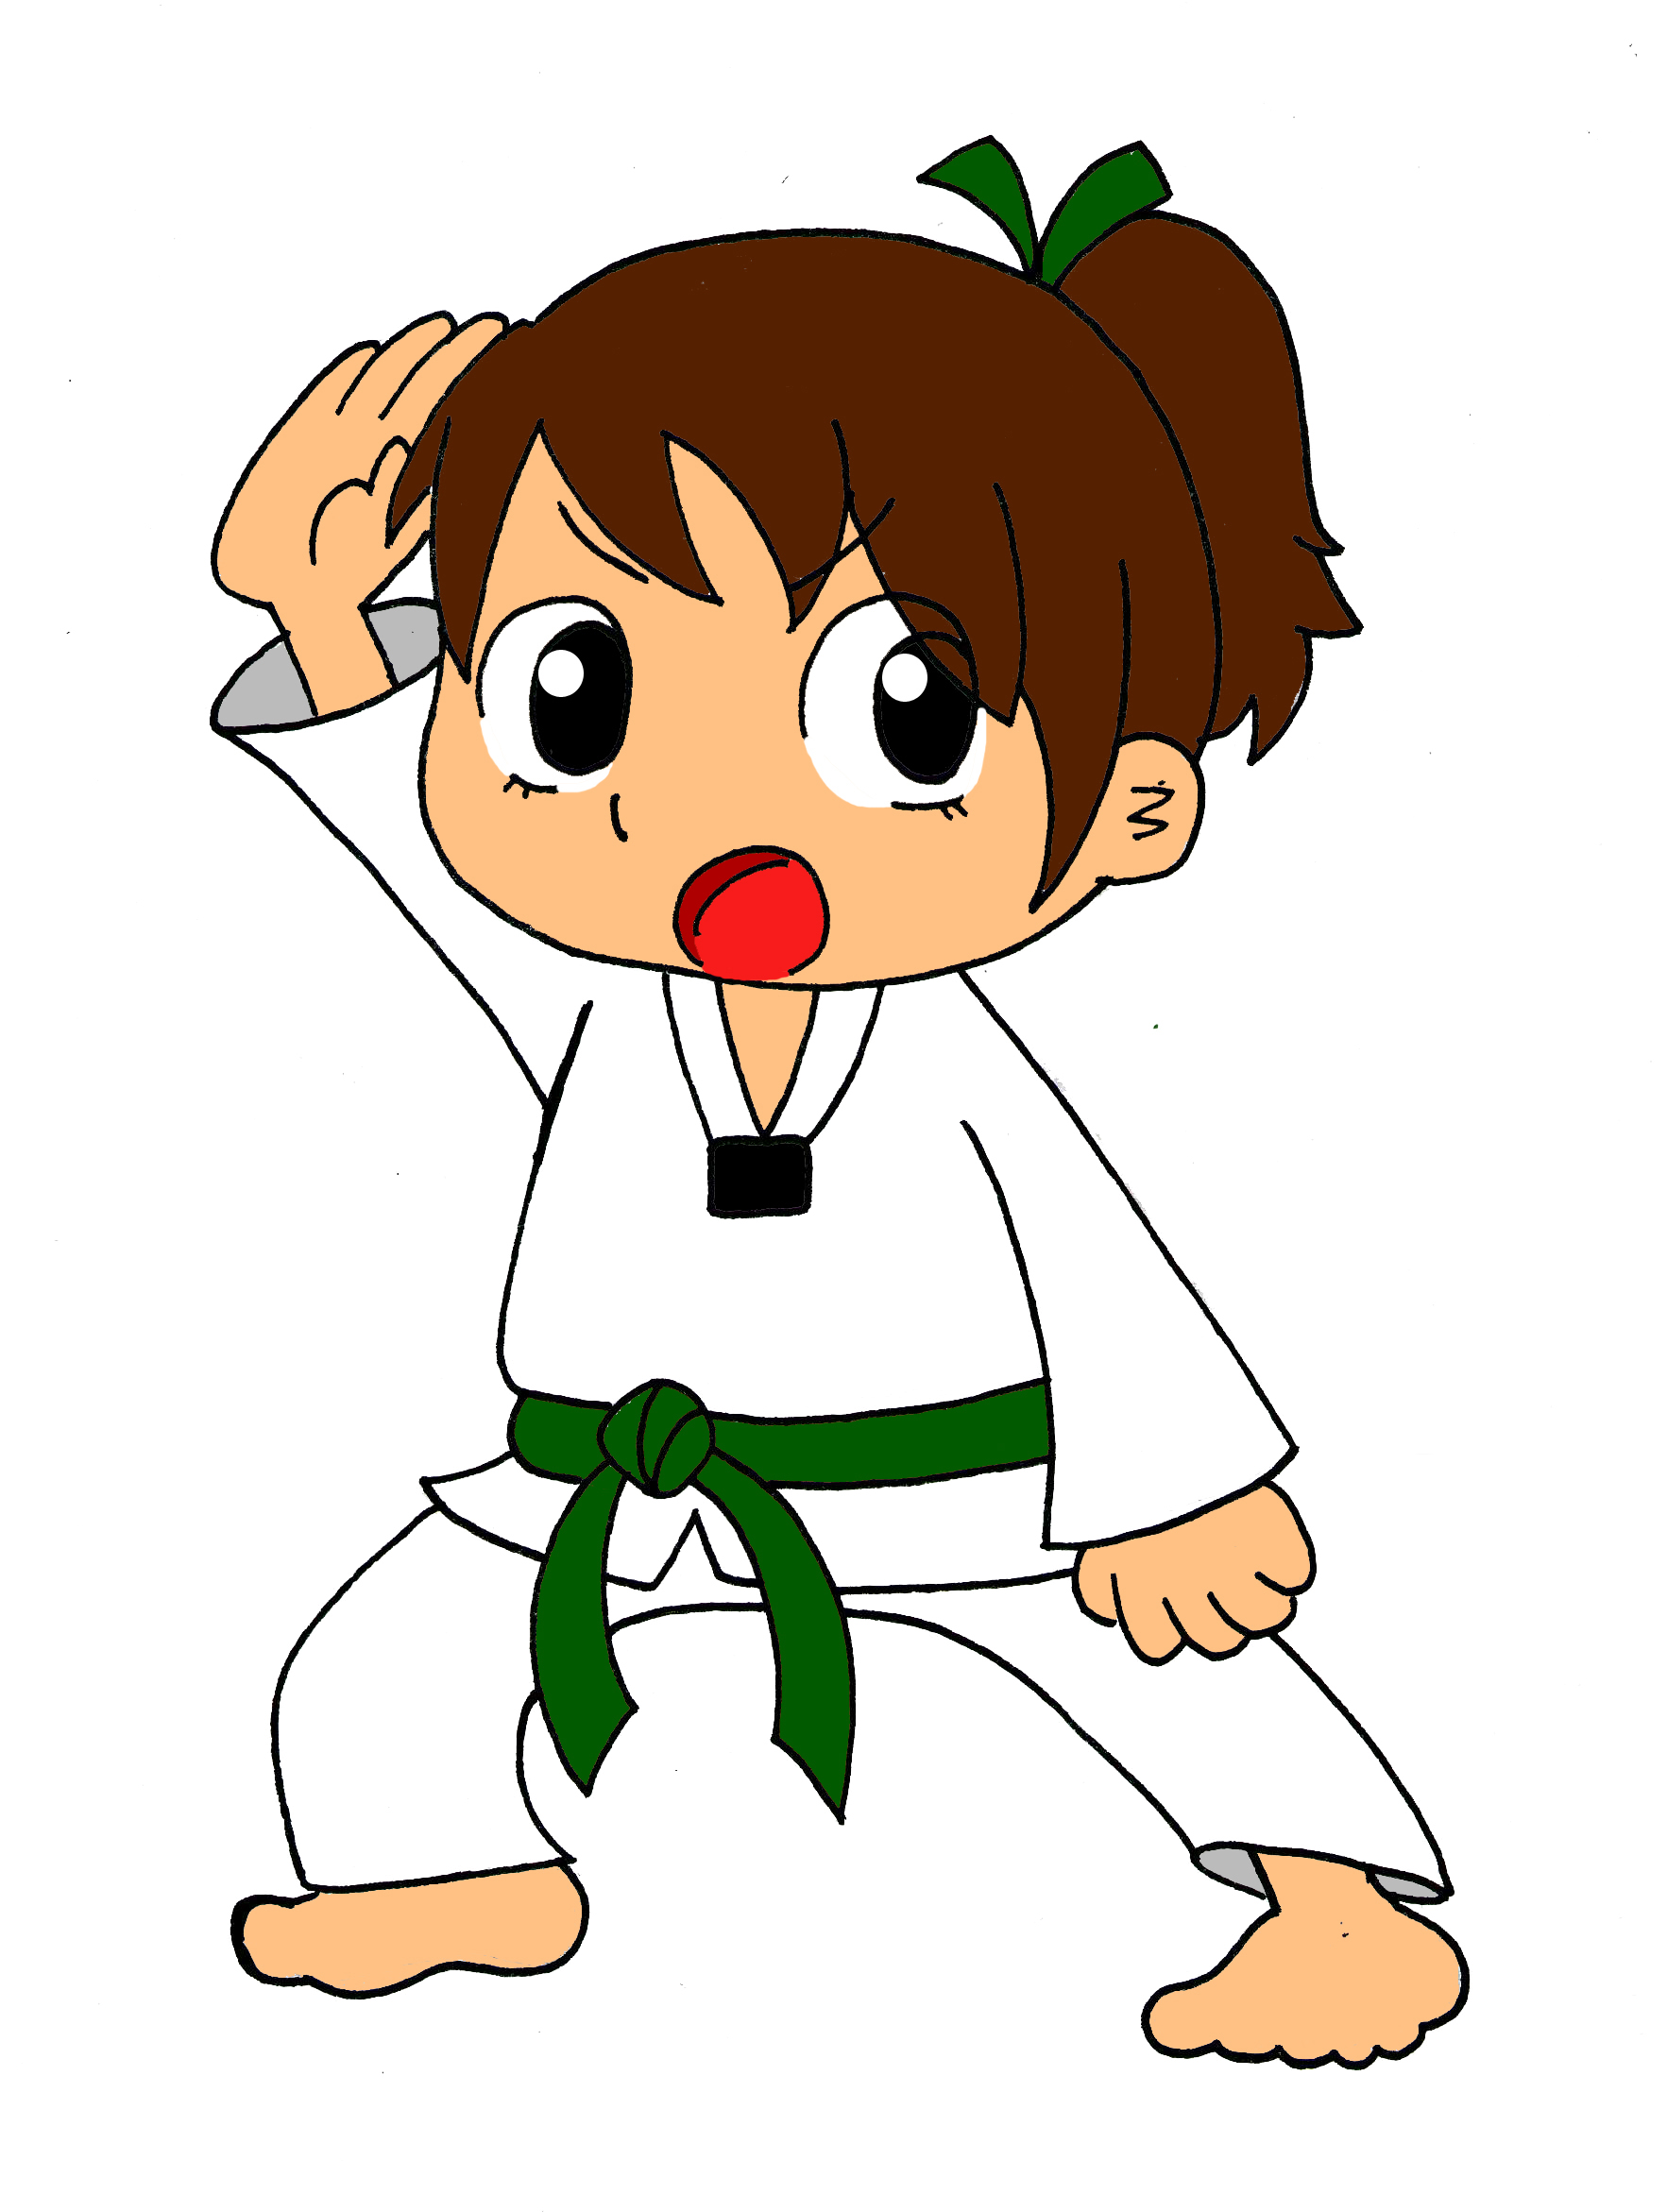 Karate cartoon clipart kid 2 - Clipartix